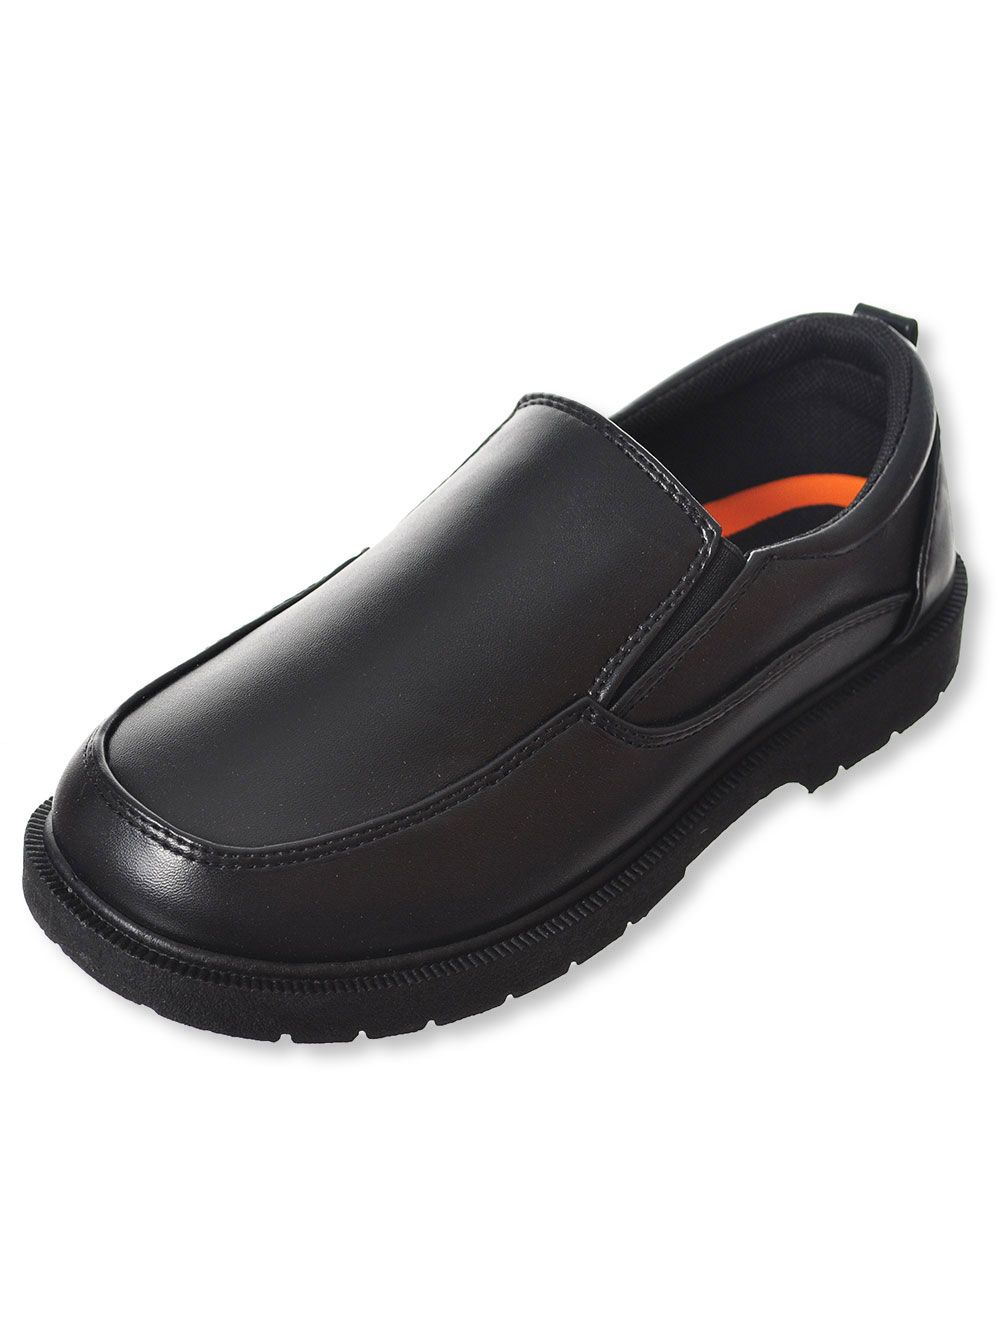 slip on school shoes